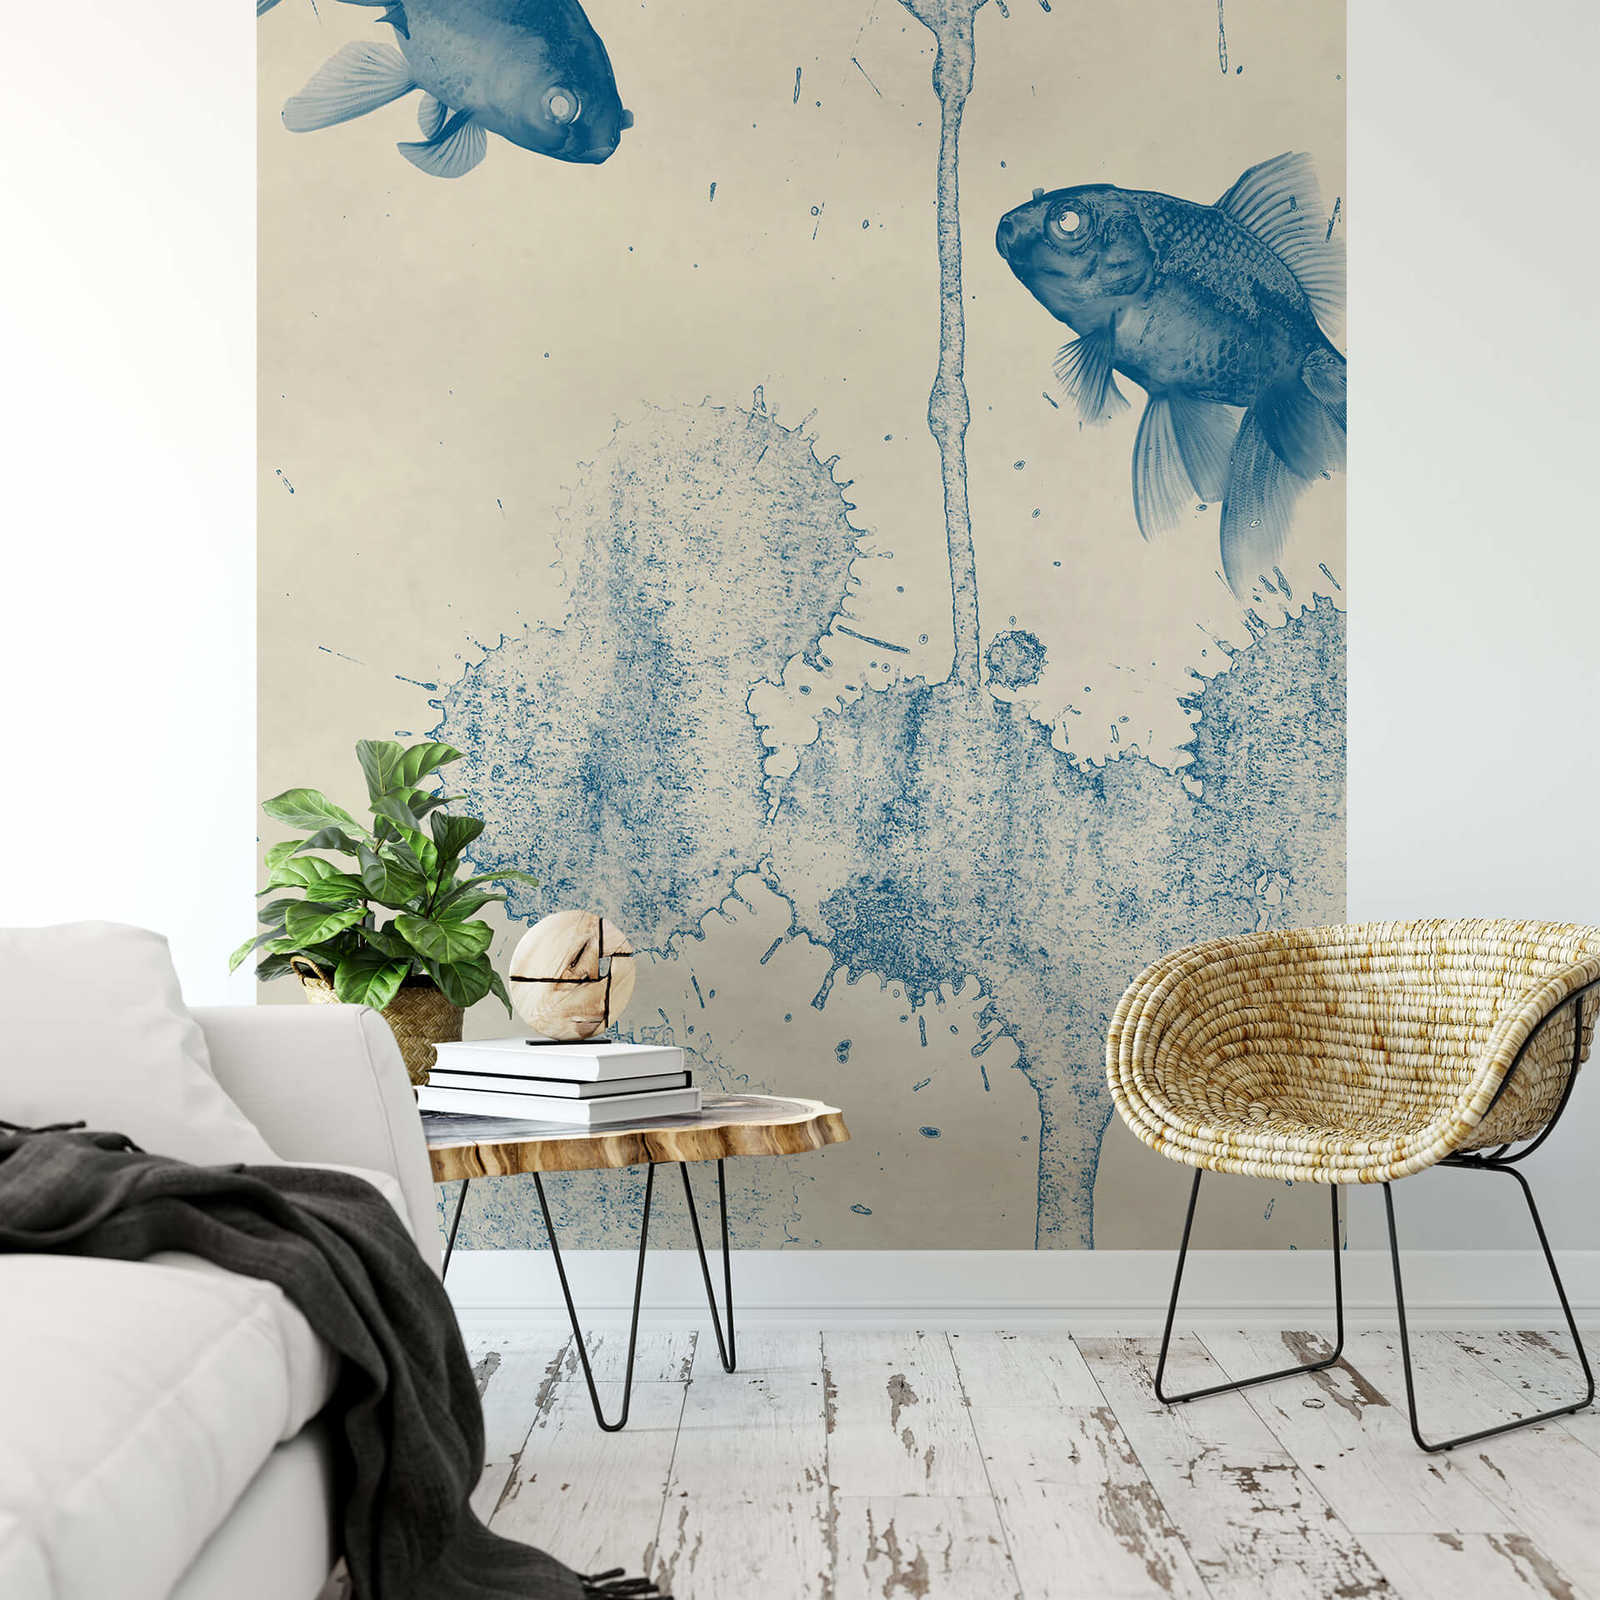             Narrow mural blue fish - beige, blue
        